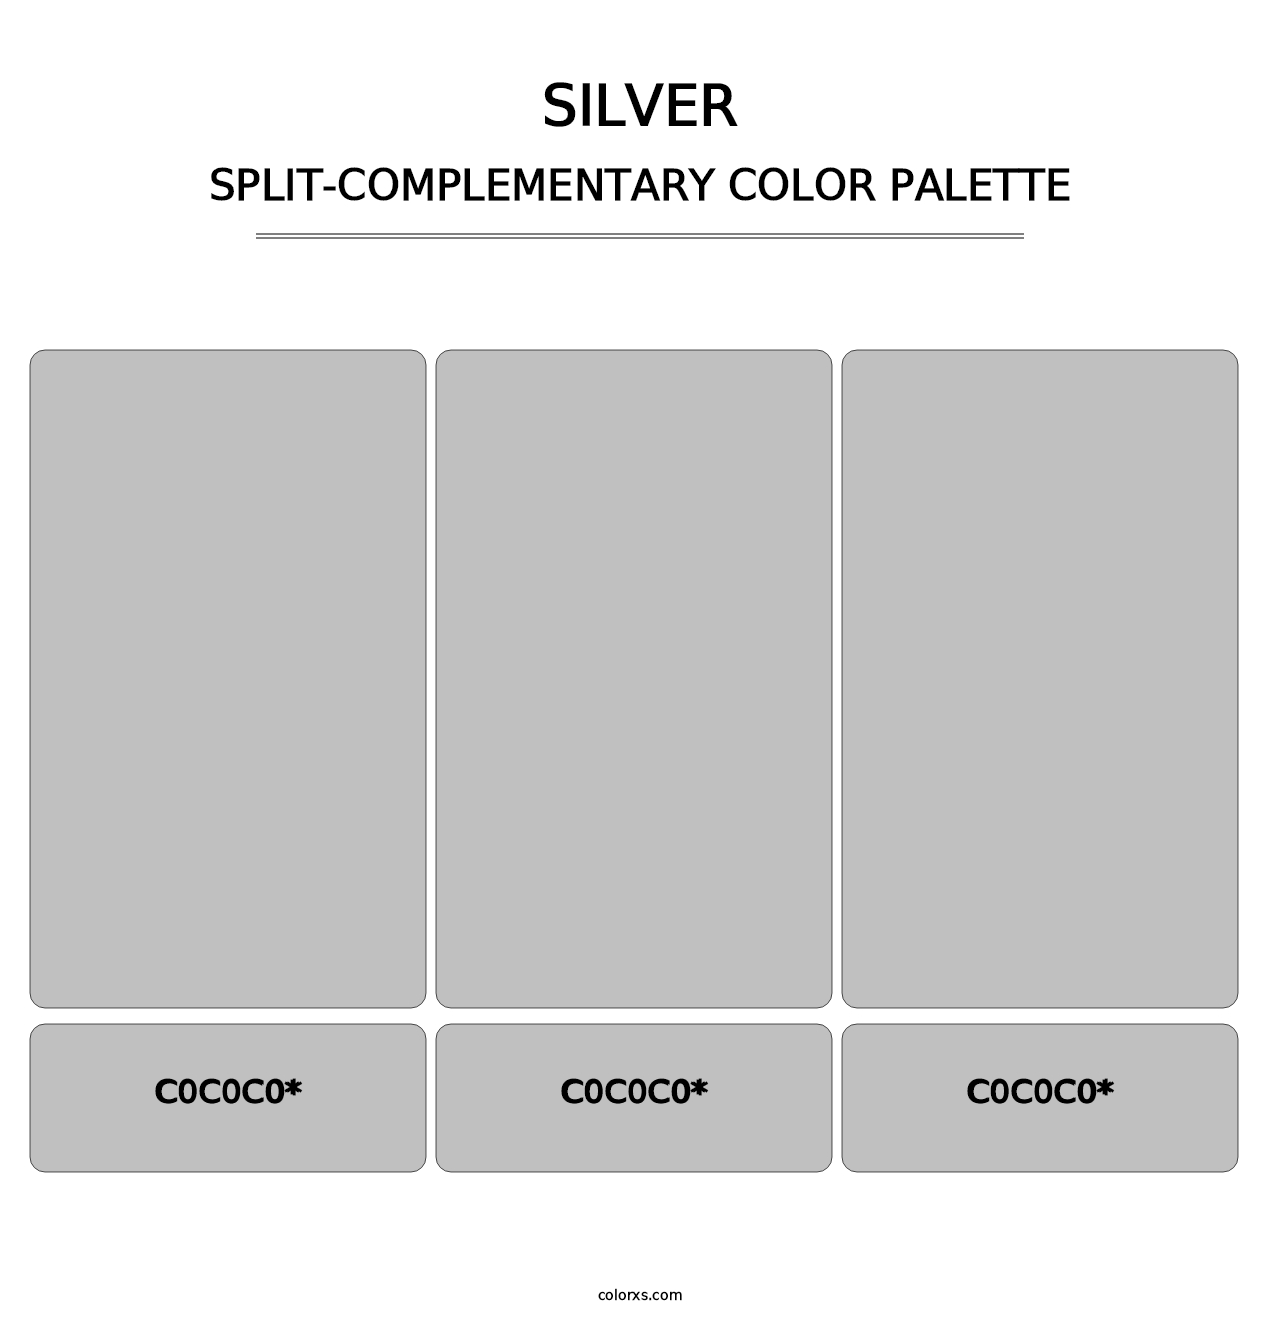 Silver - Split-Complementary Color Palette